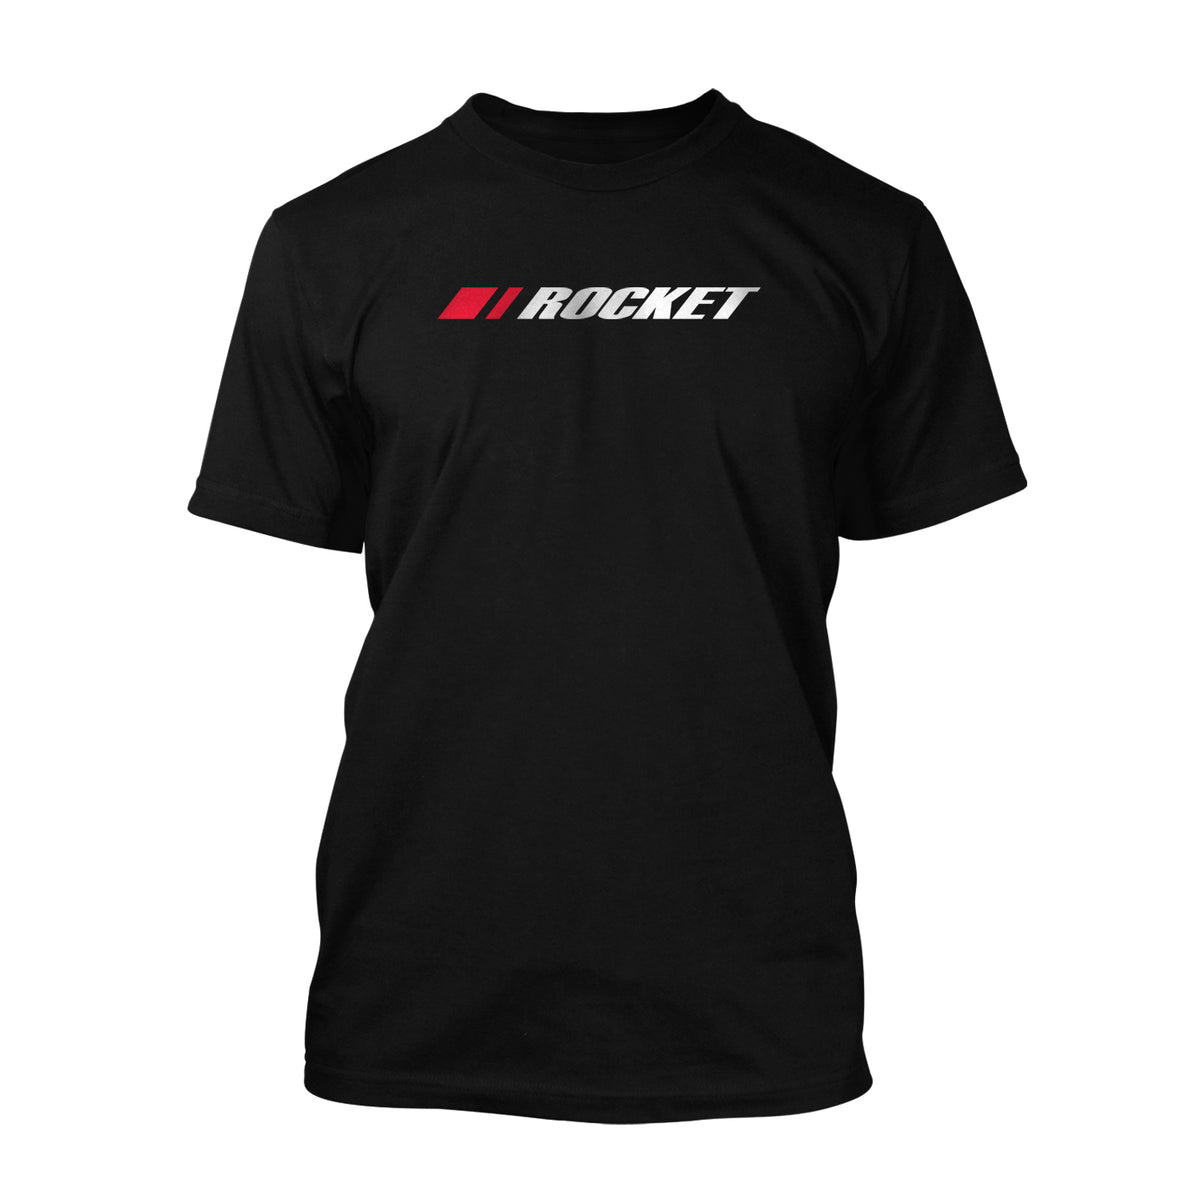 Rocket T-Shirt